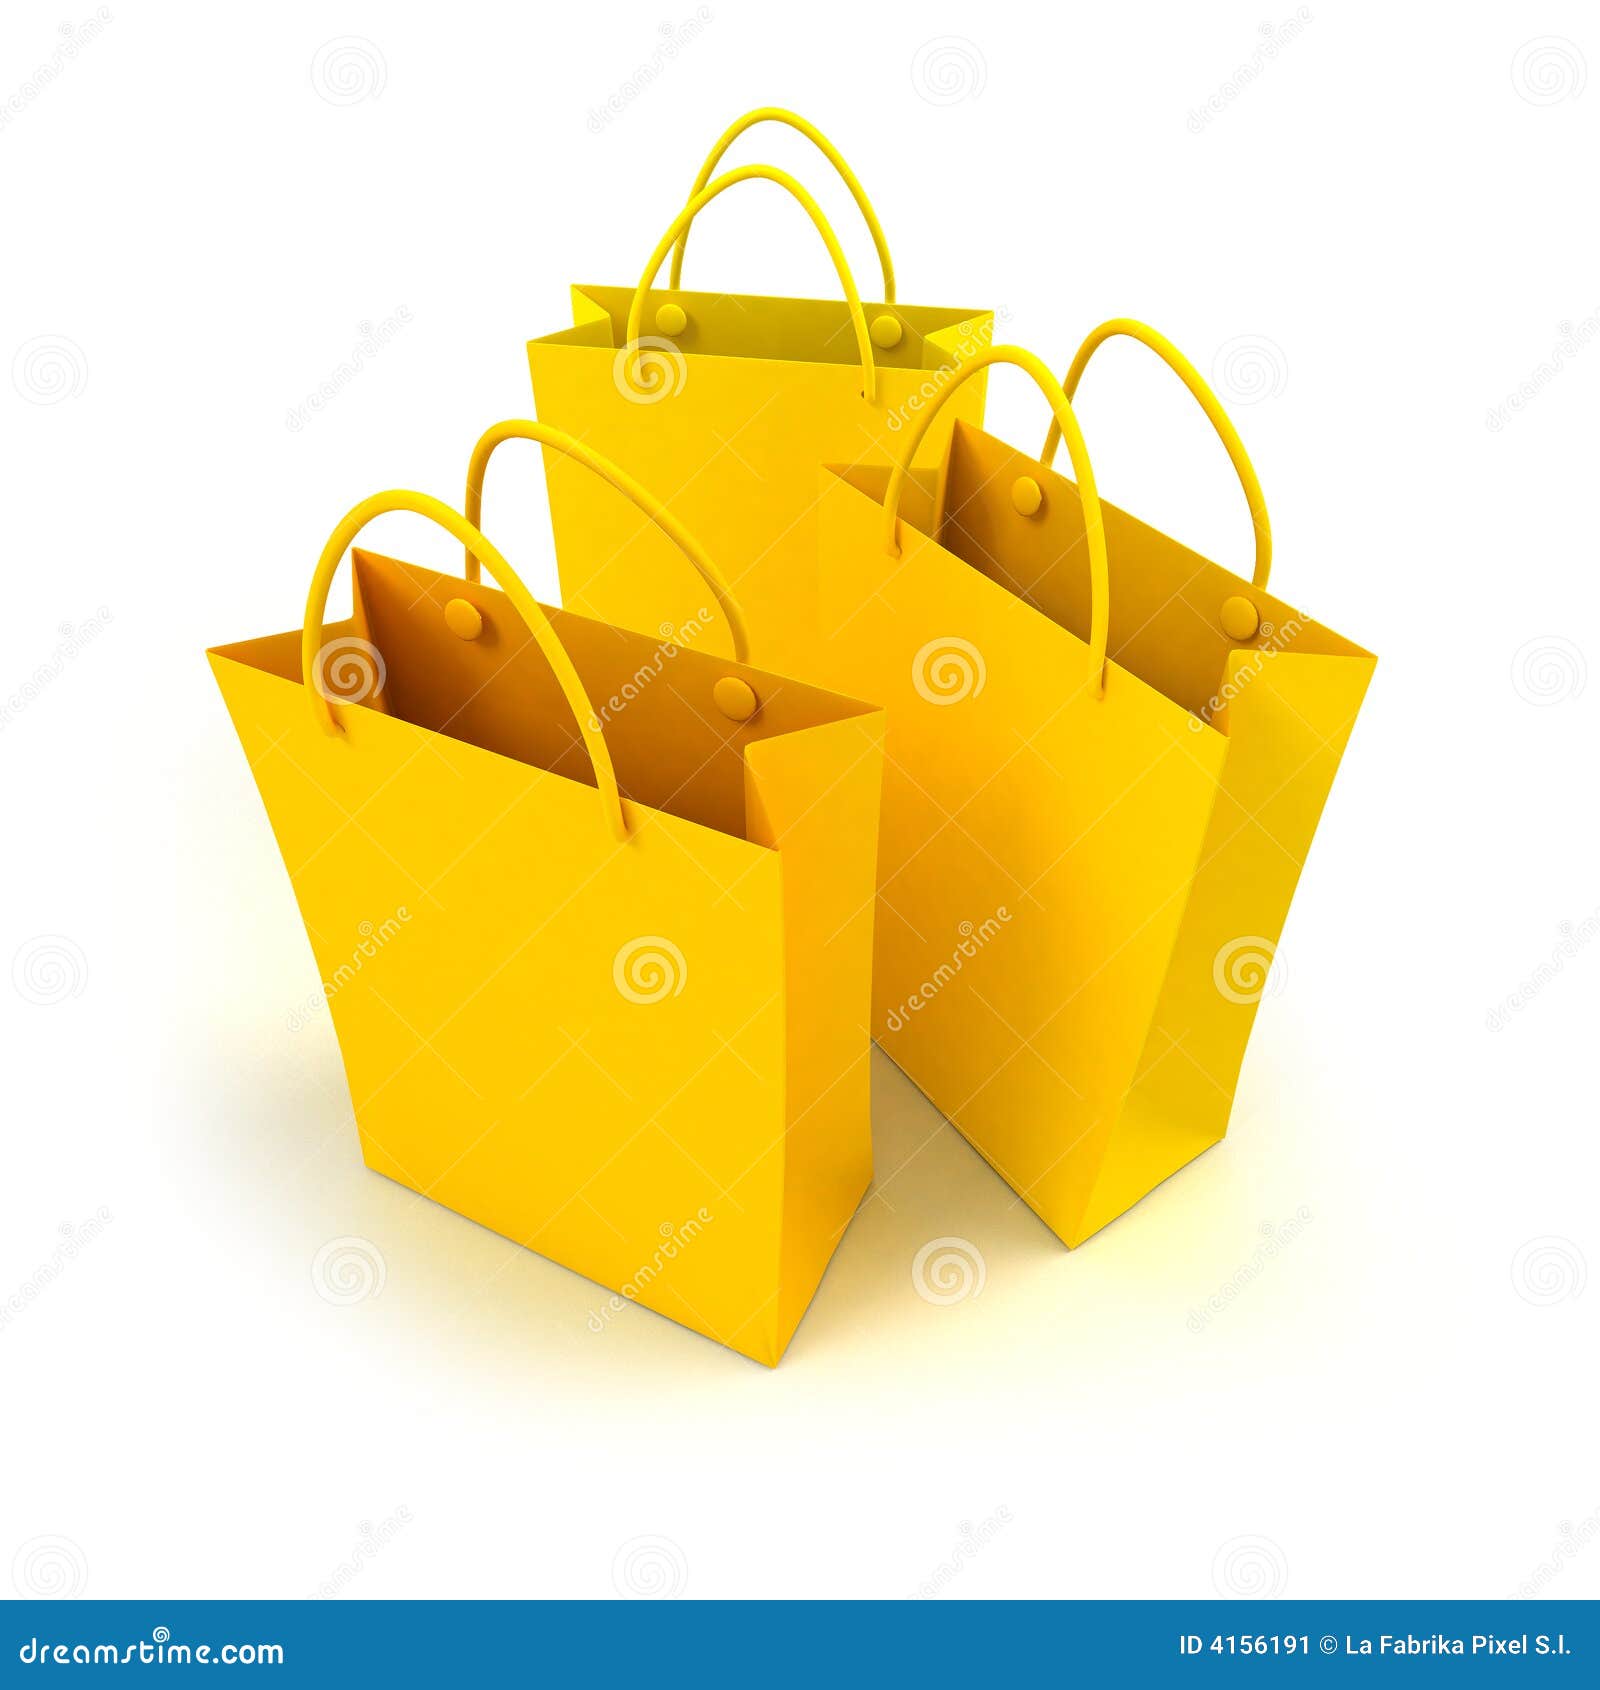 yellow shopping bags trio